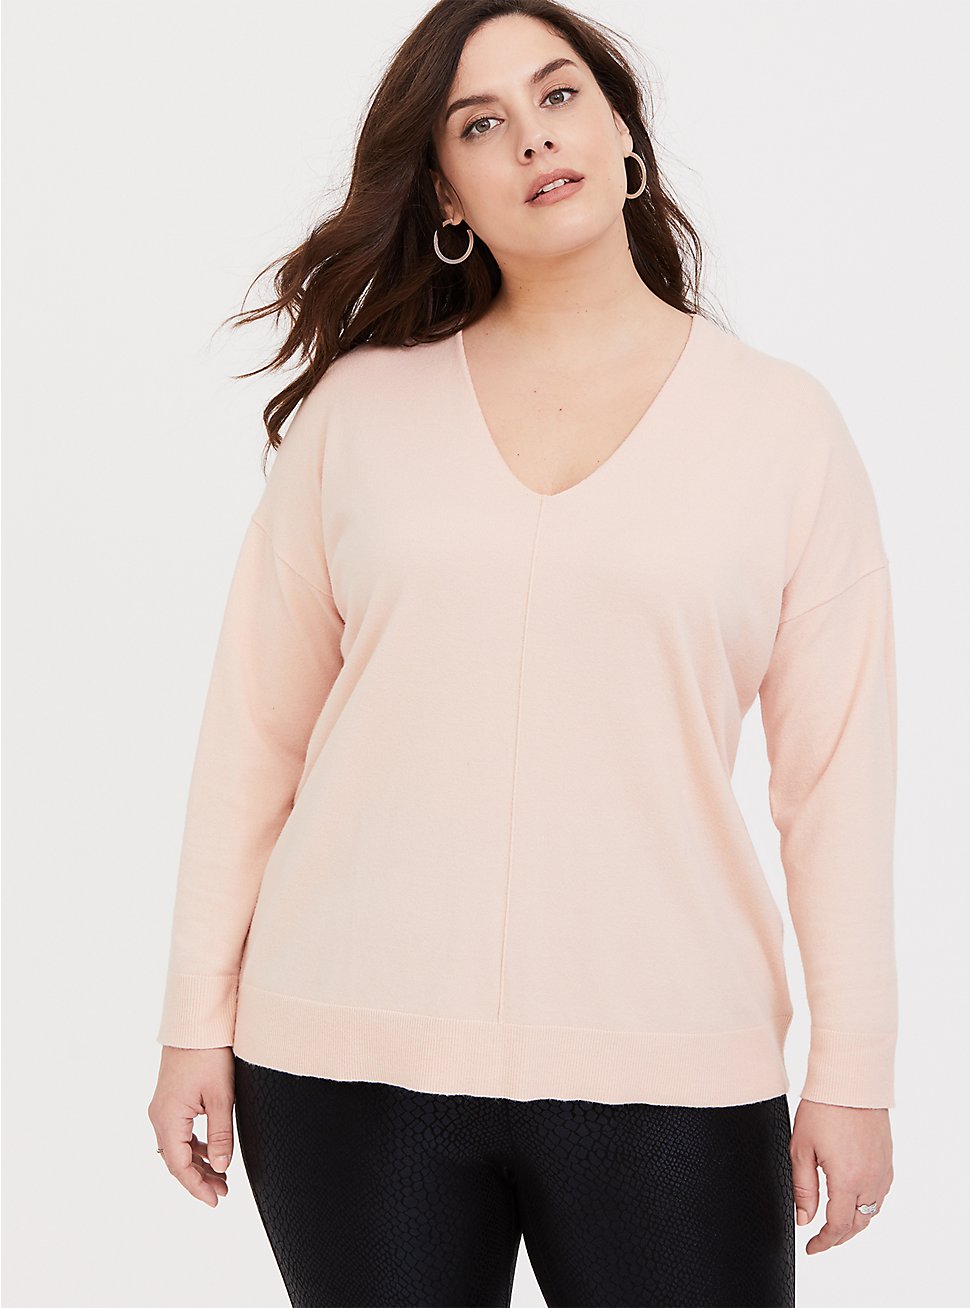 Derek Heart Women Plus Size 2x 3x Rose Pale Pink Sweater w Lace Floral Knit Top 